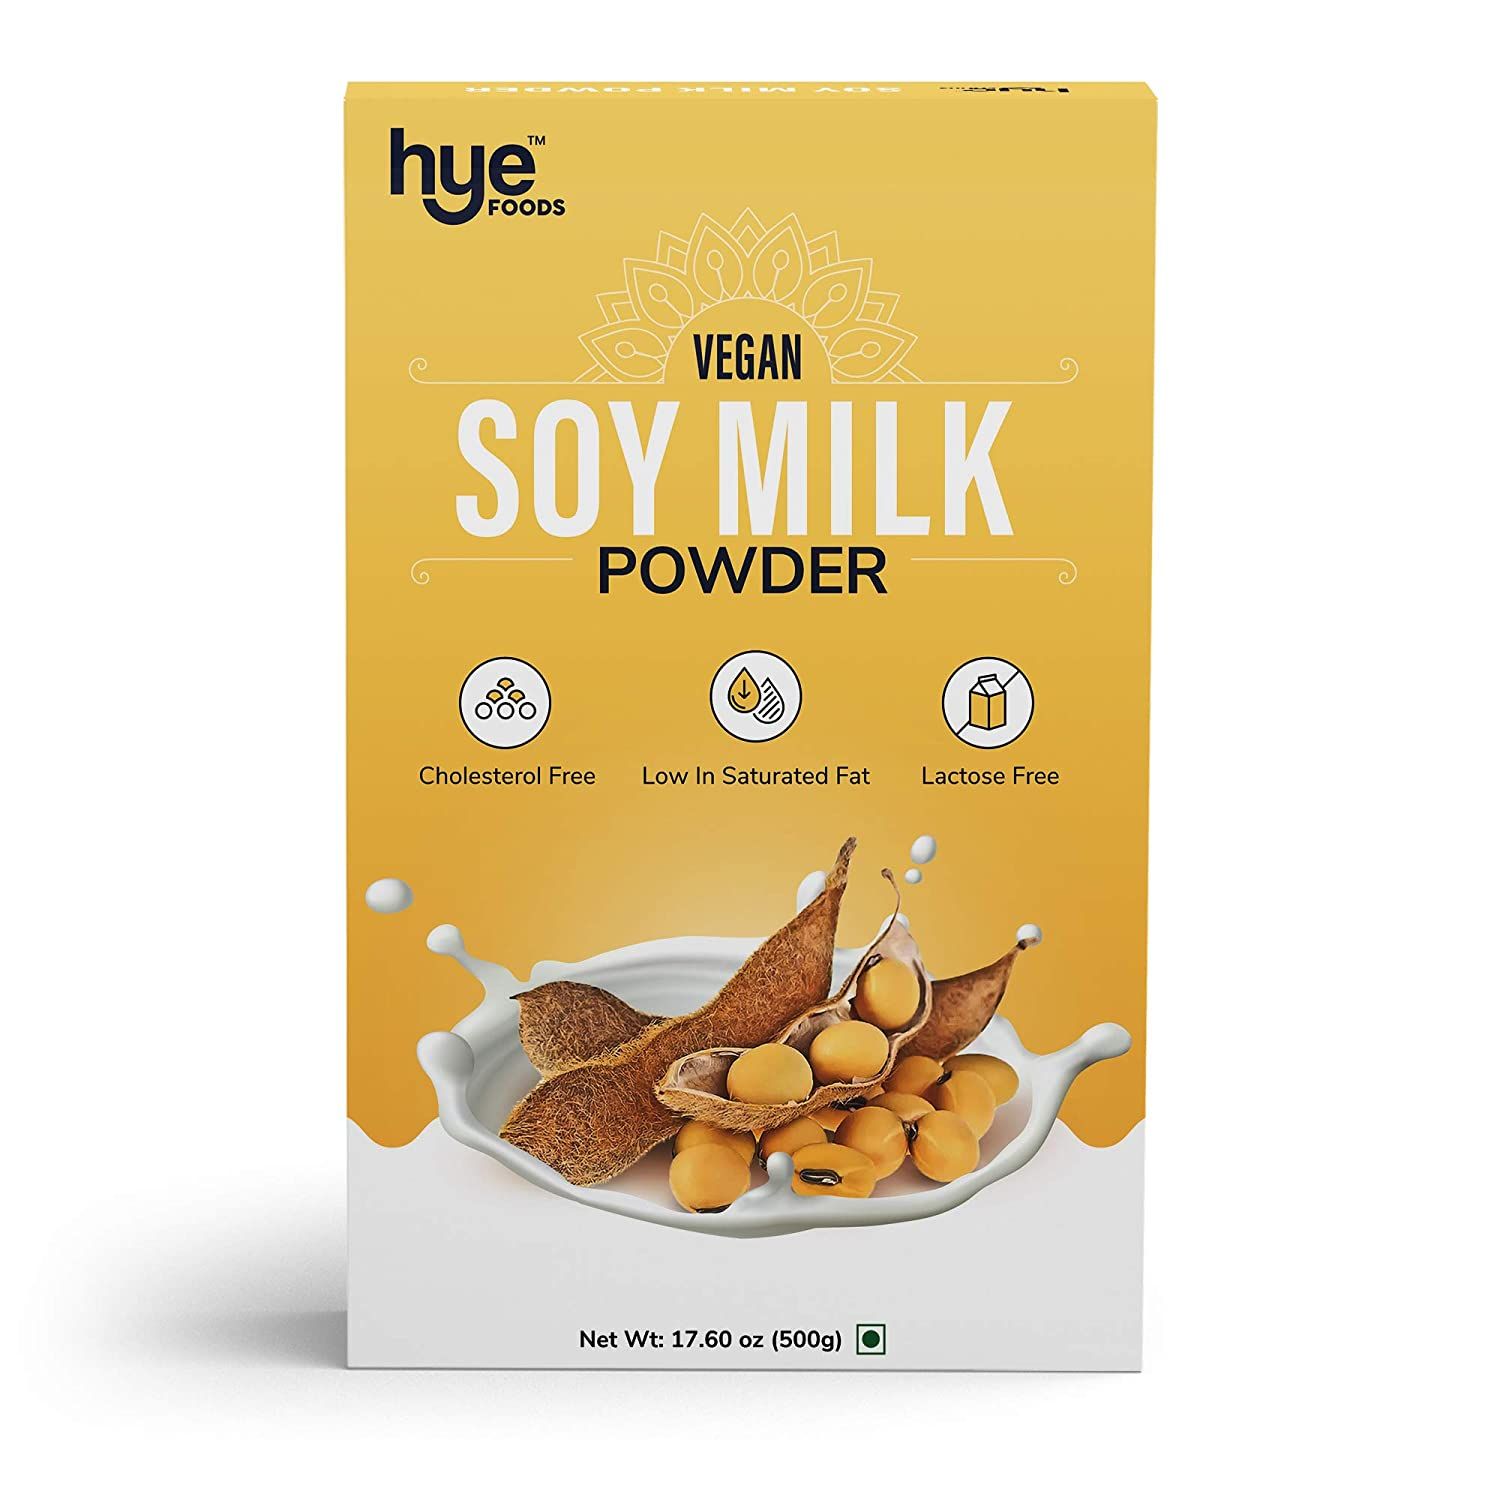 Hey Foods Vegan Soy Milk Powder Image